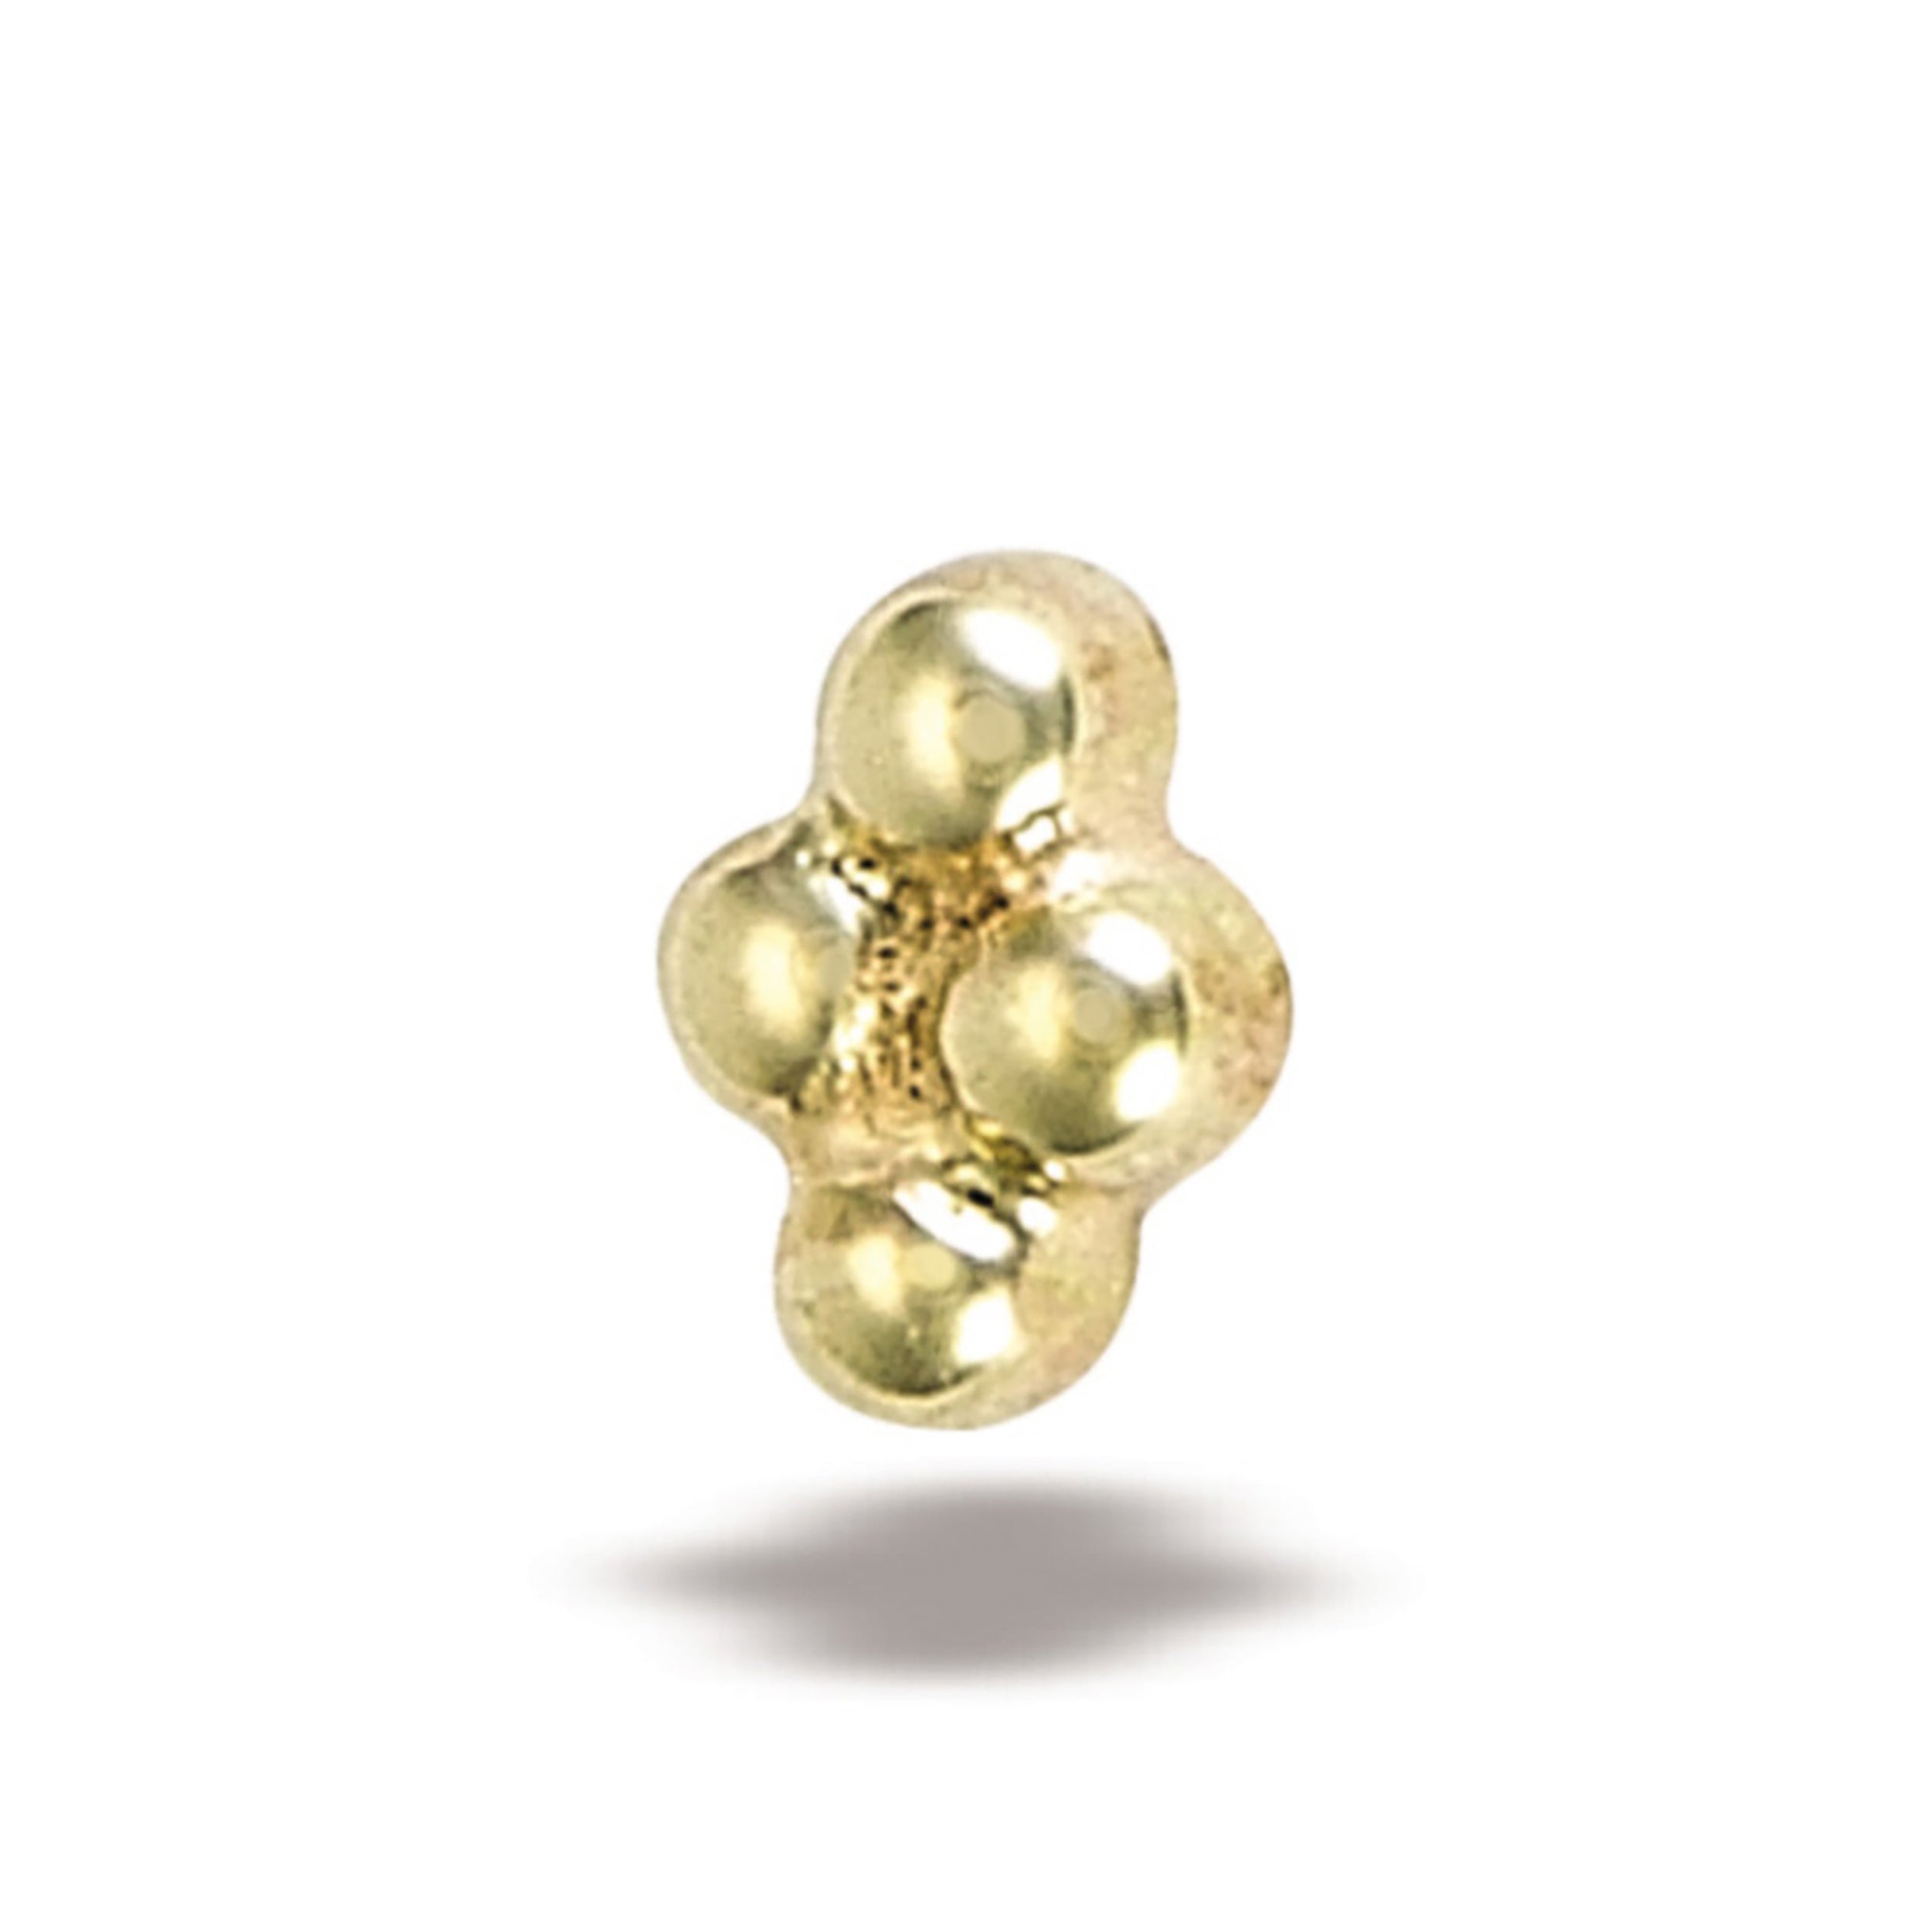 4 Bead Gold Threadless End (Body Gems)